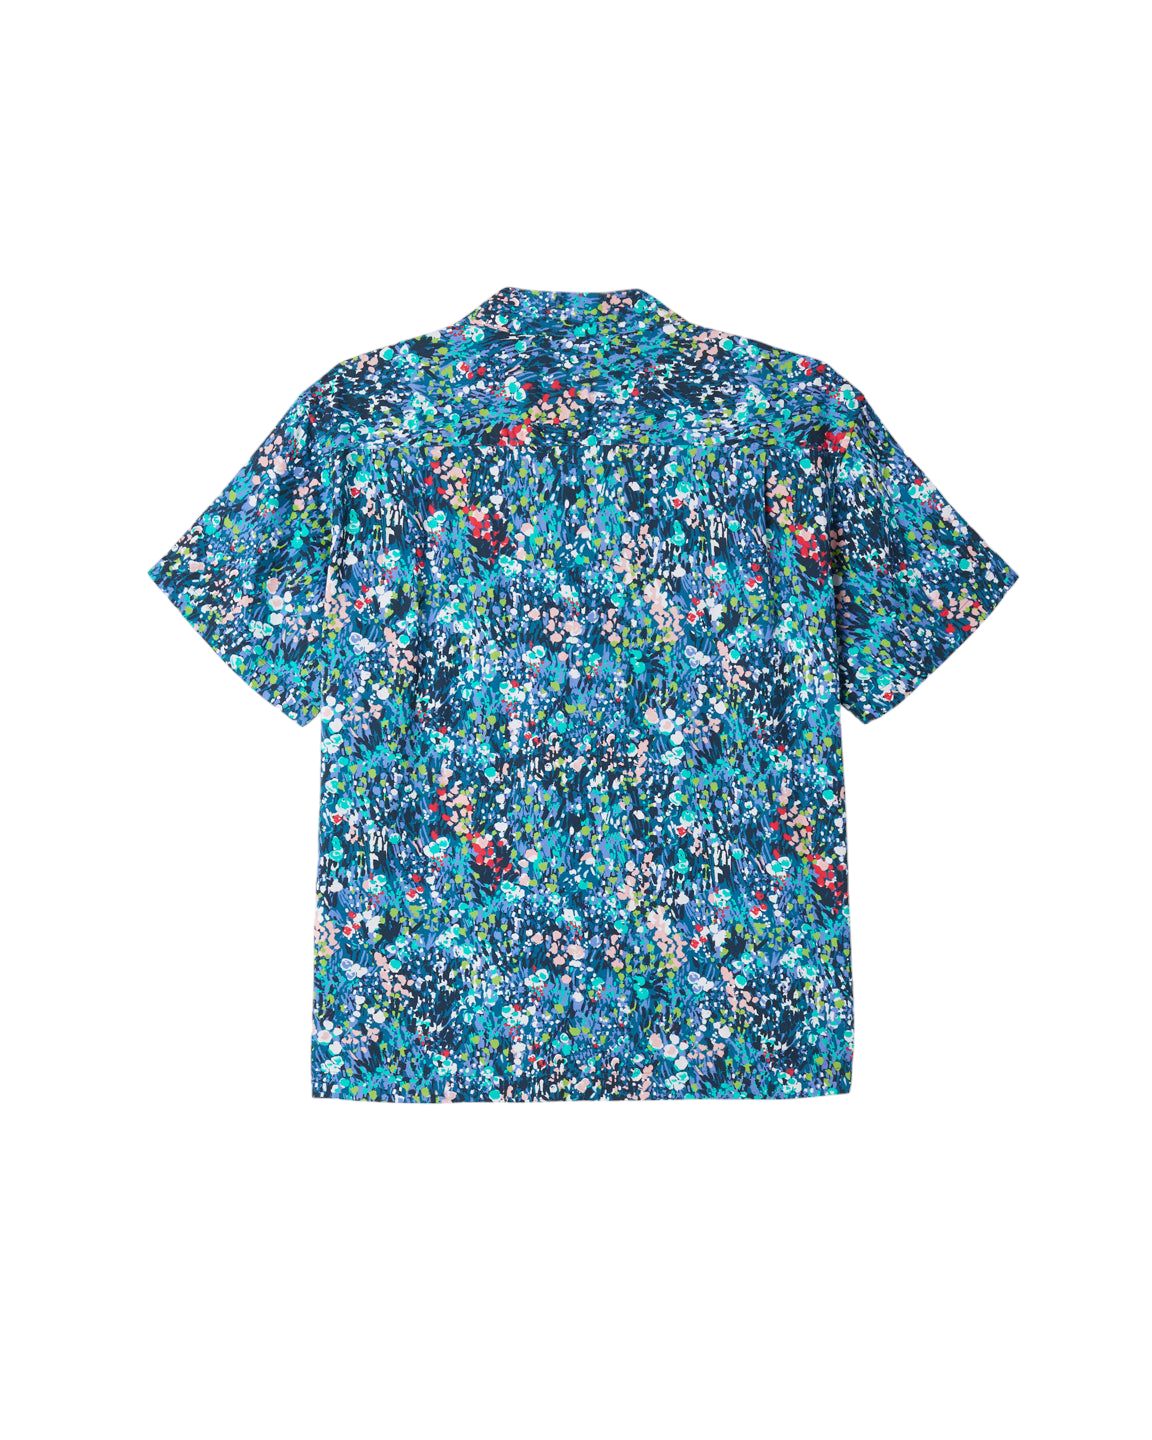 Men's The Garden Shirt Teal Blue Multi 